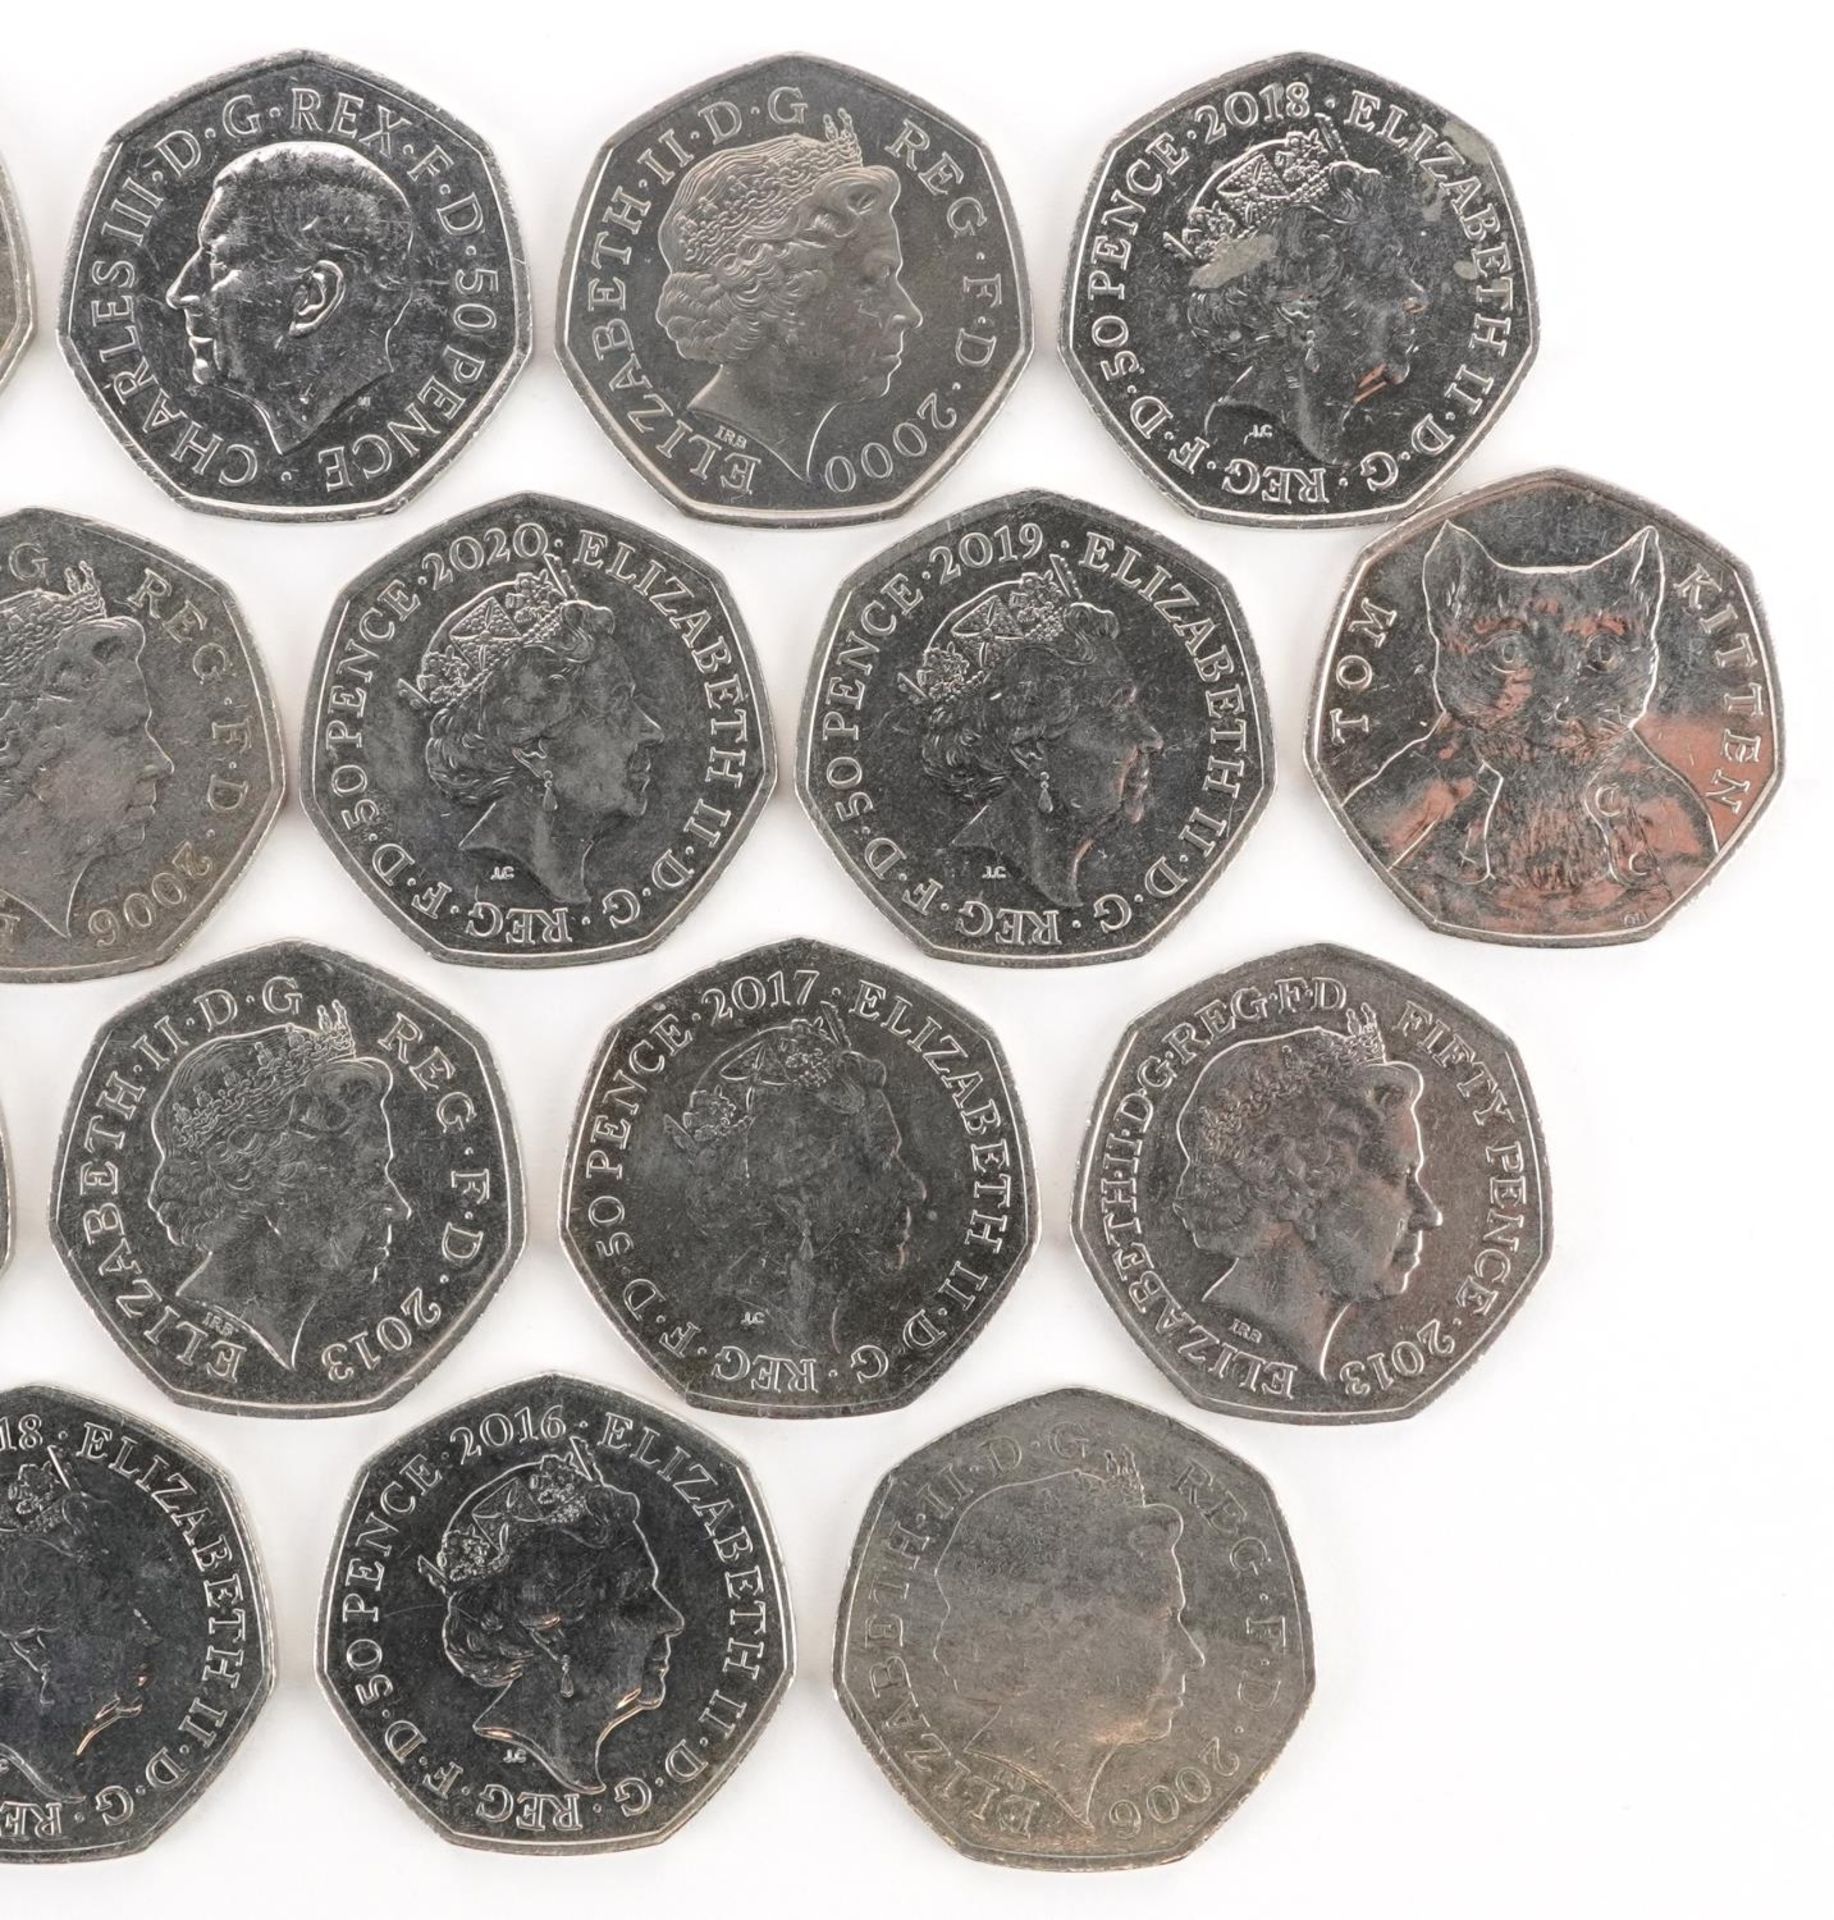 Twenty Elizabeth II fifty pence pieces, various designs including London 2012 Olympics and - Bild 6 aus 6